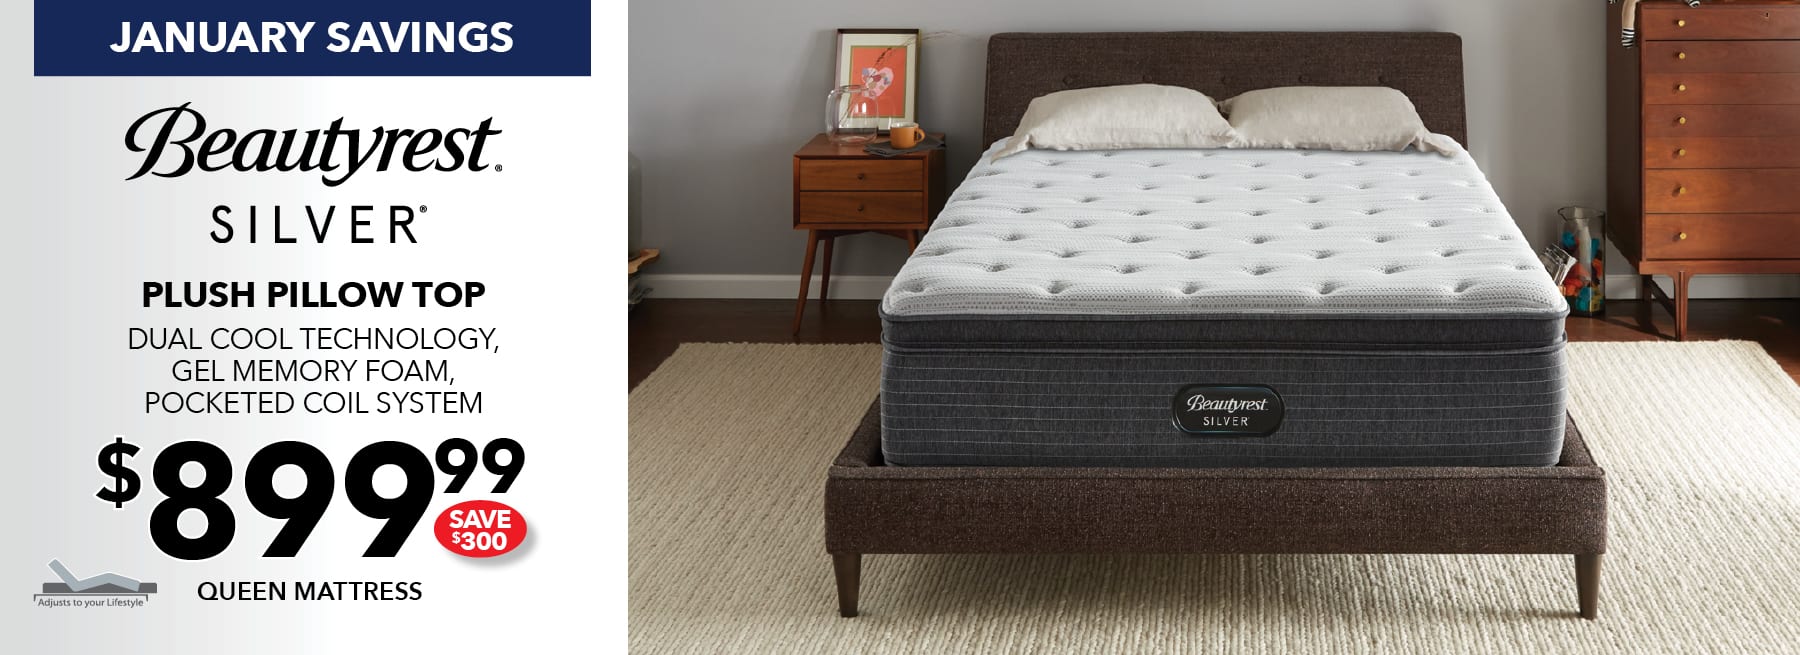 best prices for mattresses in las vegas